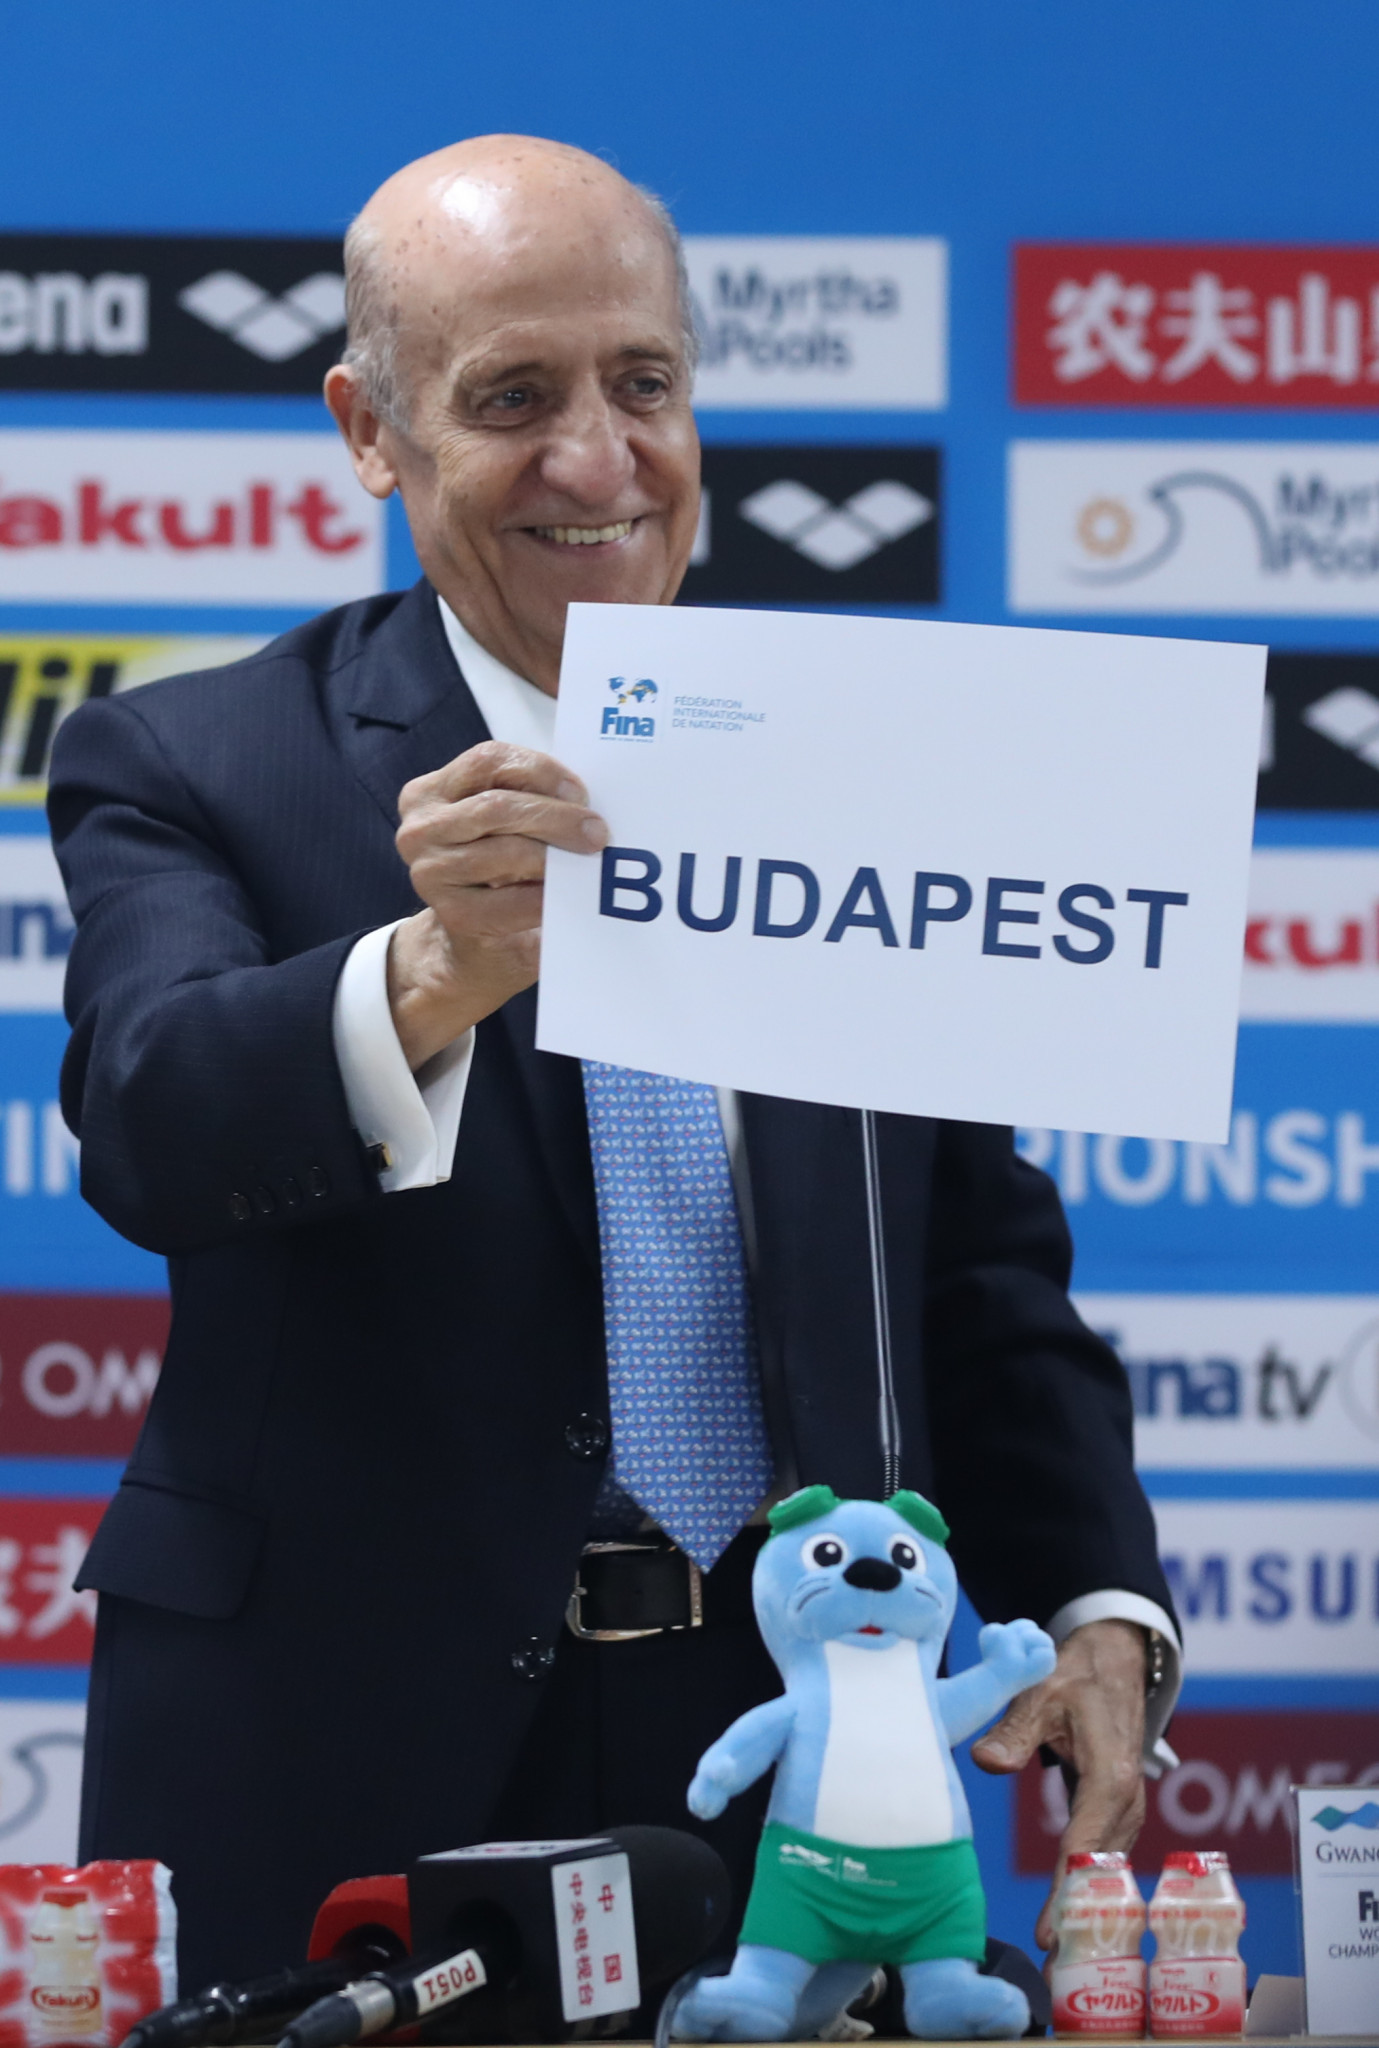 International Swimming Federation President Julio Maglione made the announcement that Budapest would host the 2027 World Aquatics Championships ©Gwangju 2019